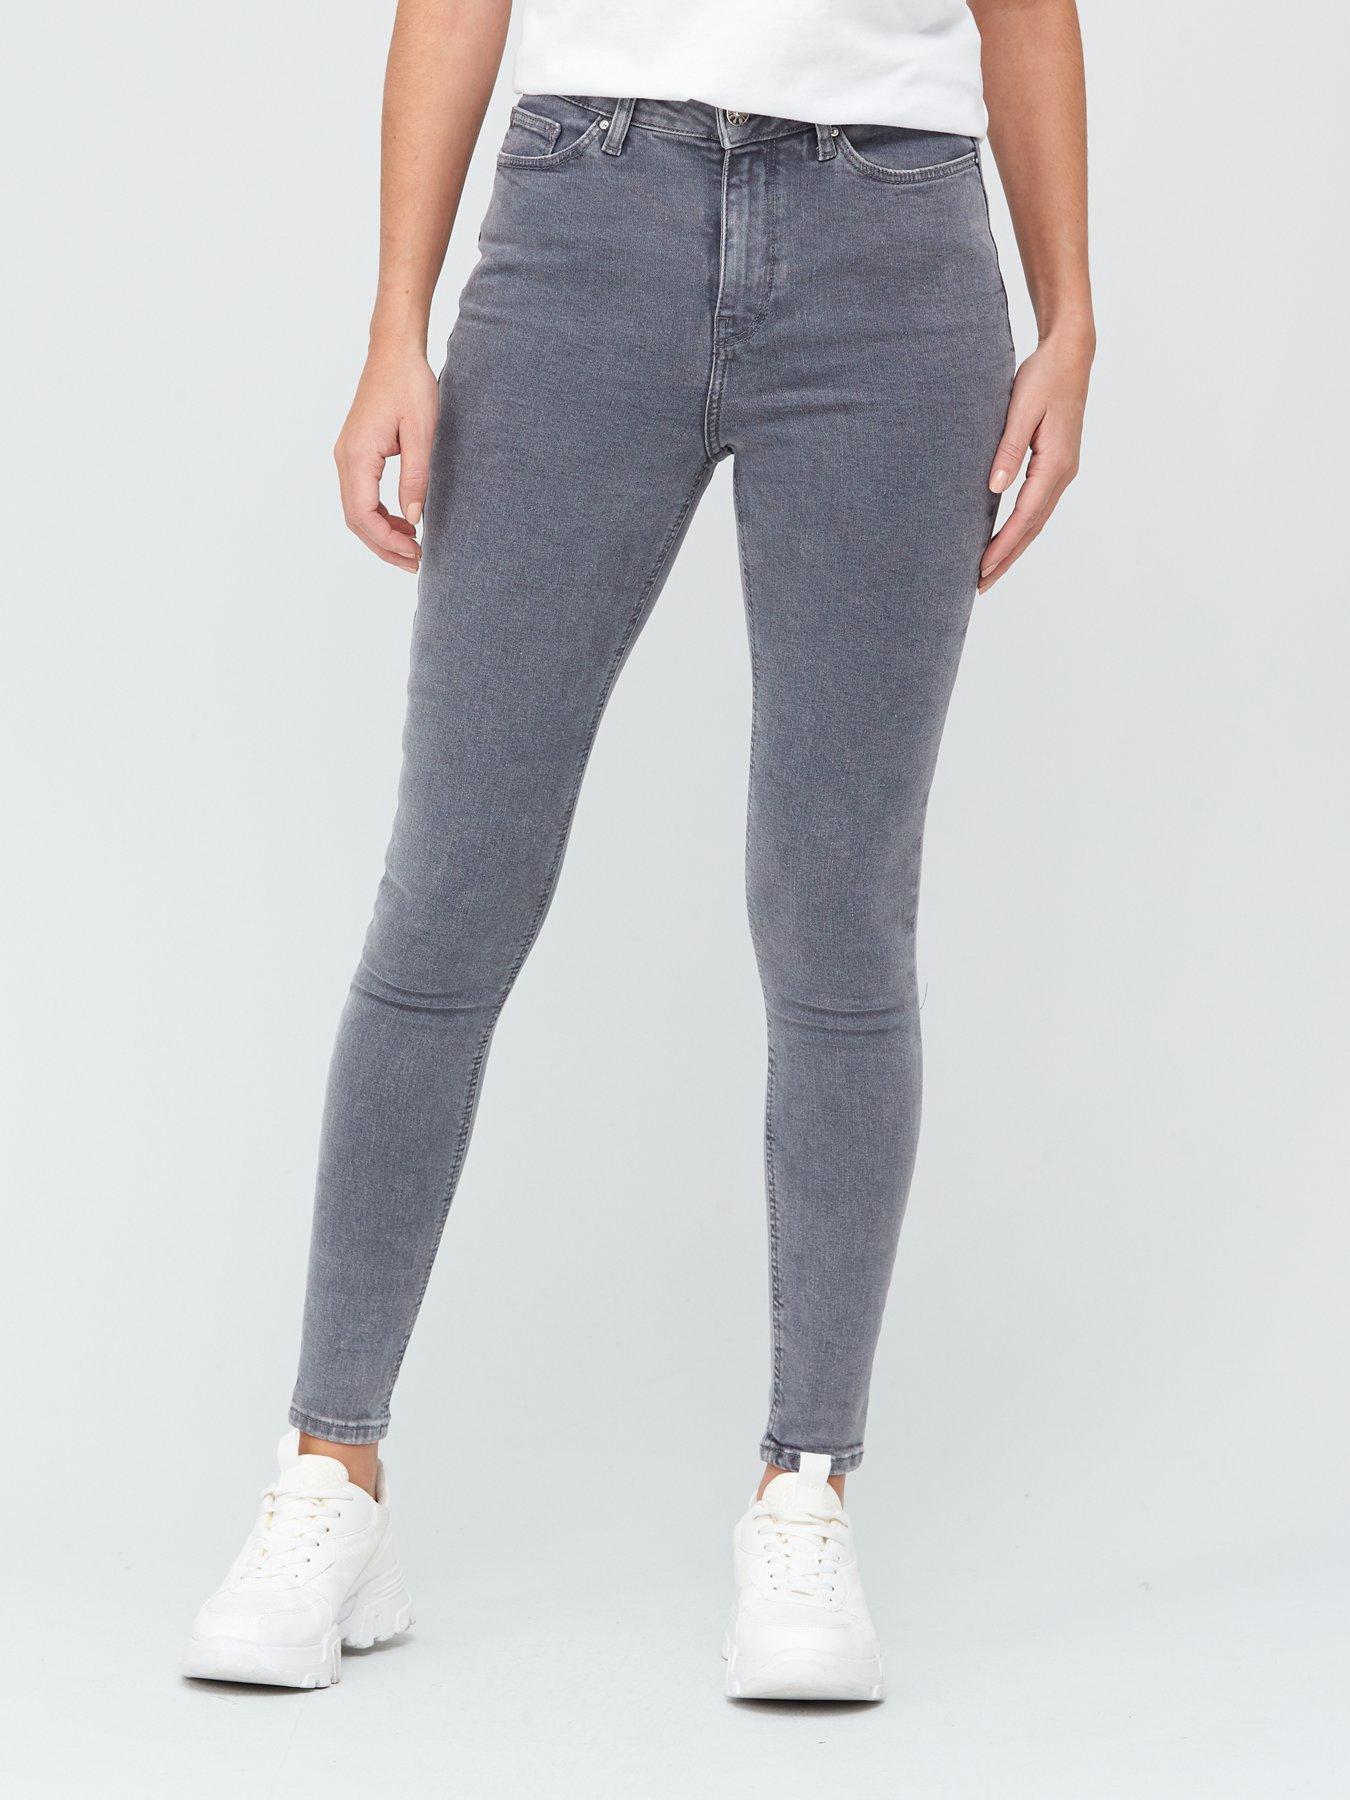 grey skinny jeans womens uk